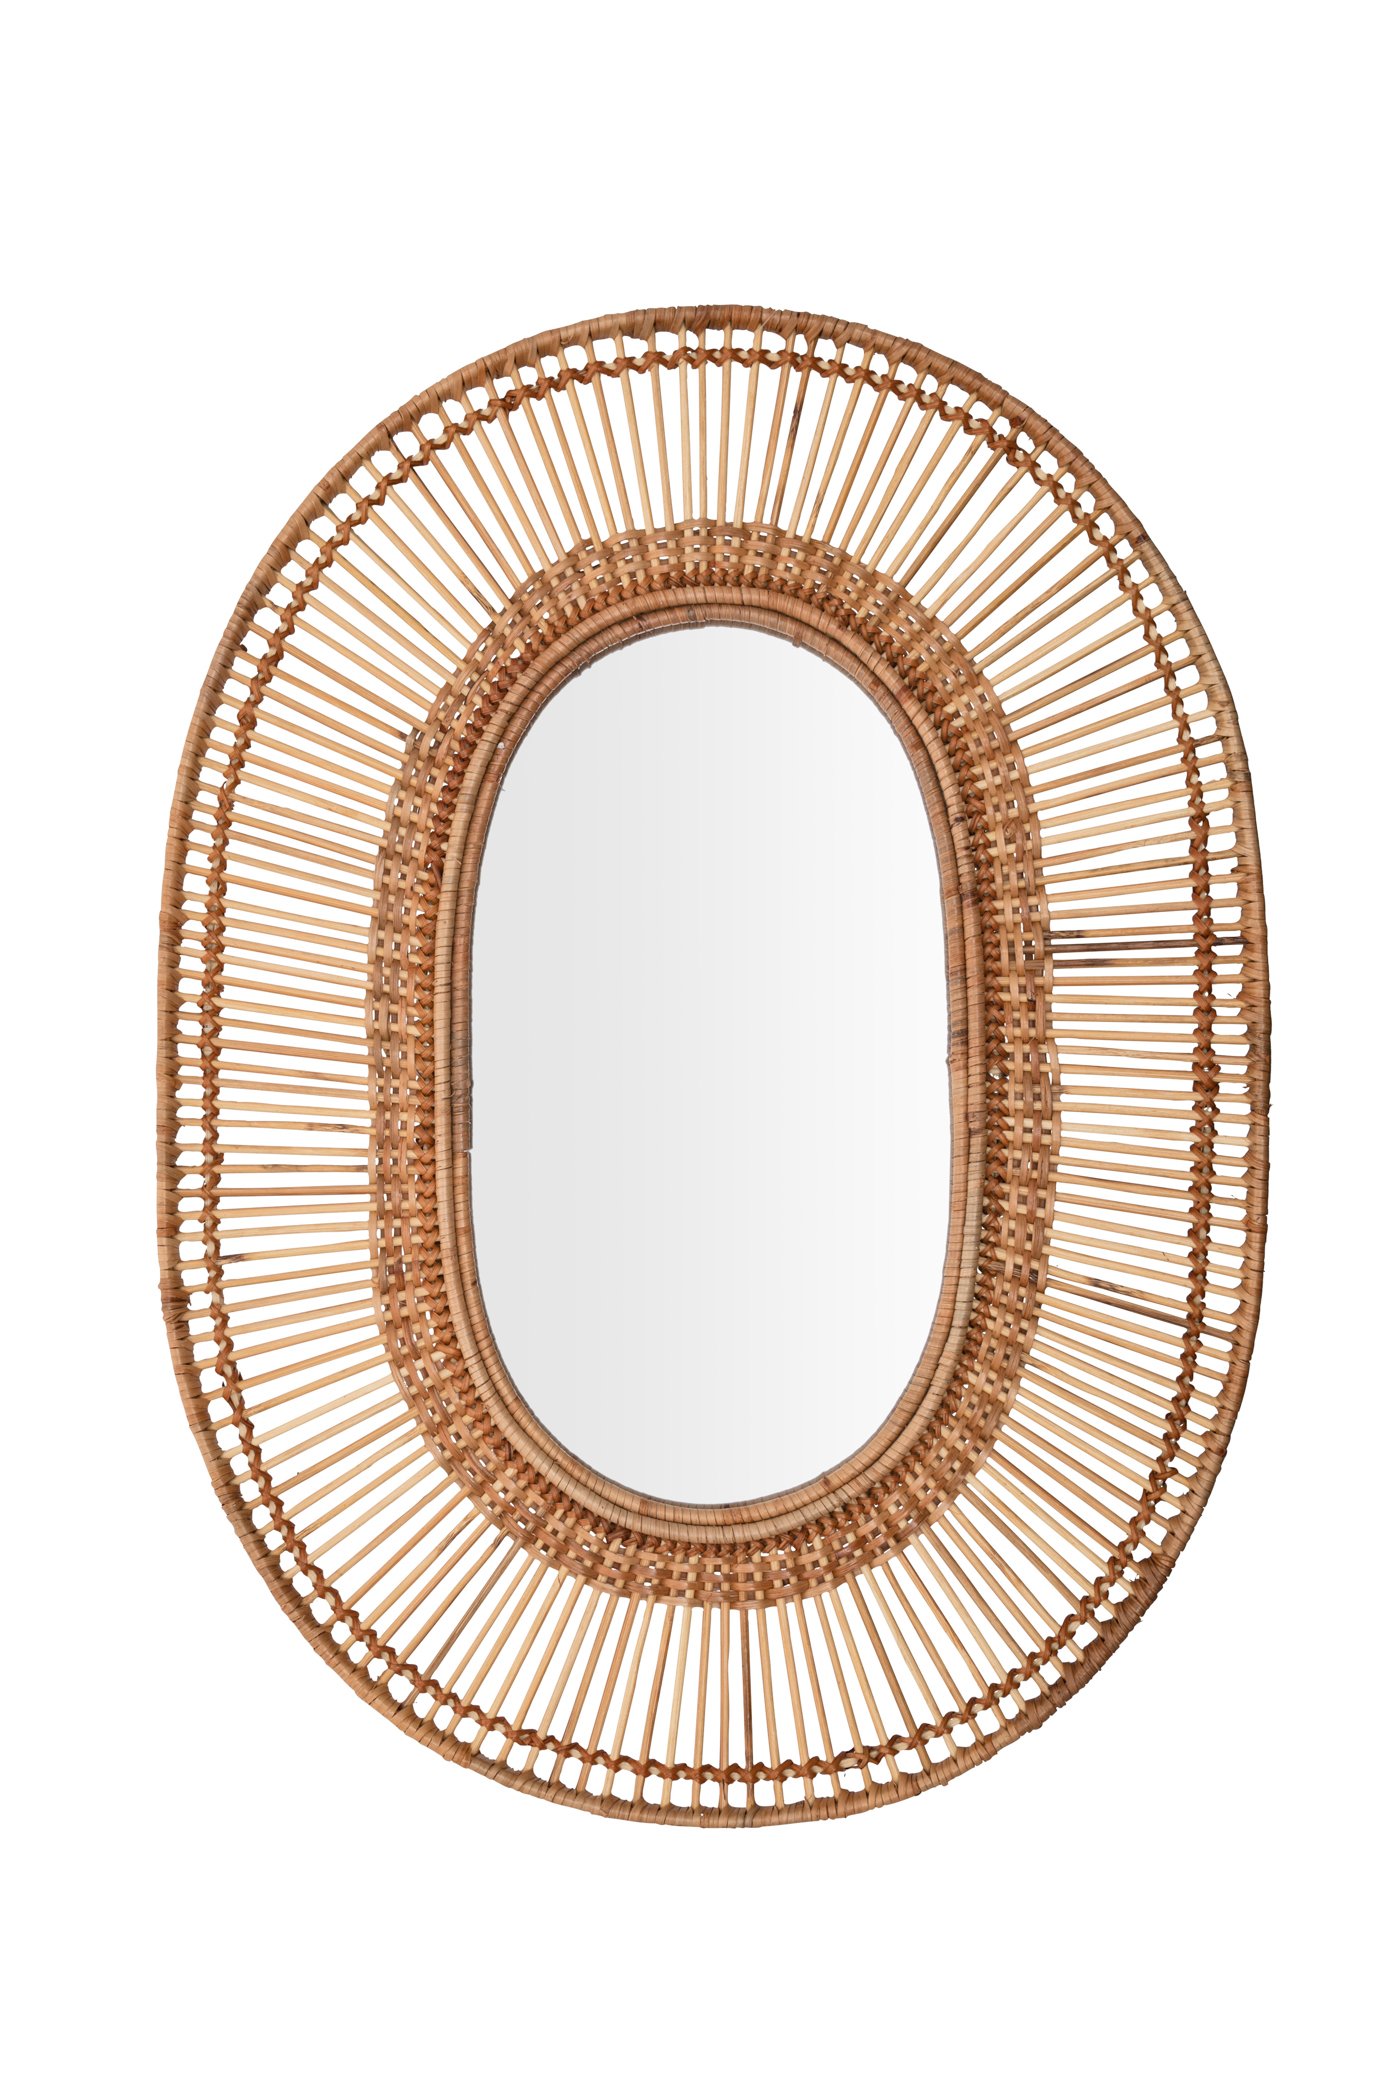 Oval bamboo mirror